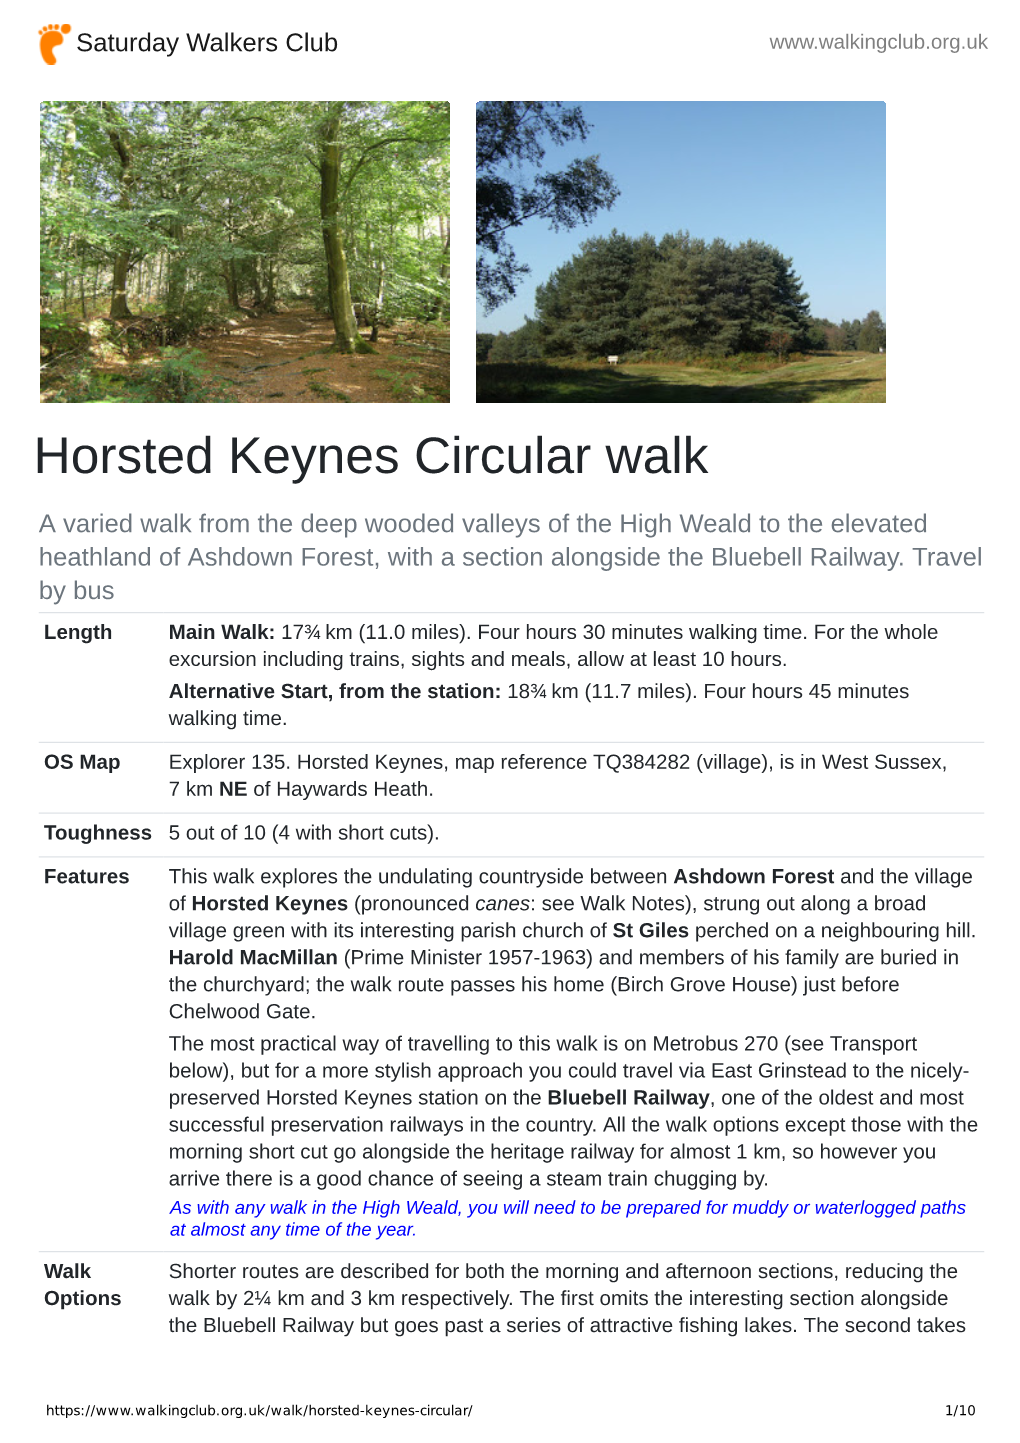 Horsted Keynes Circular Walk